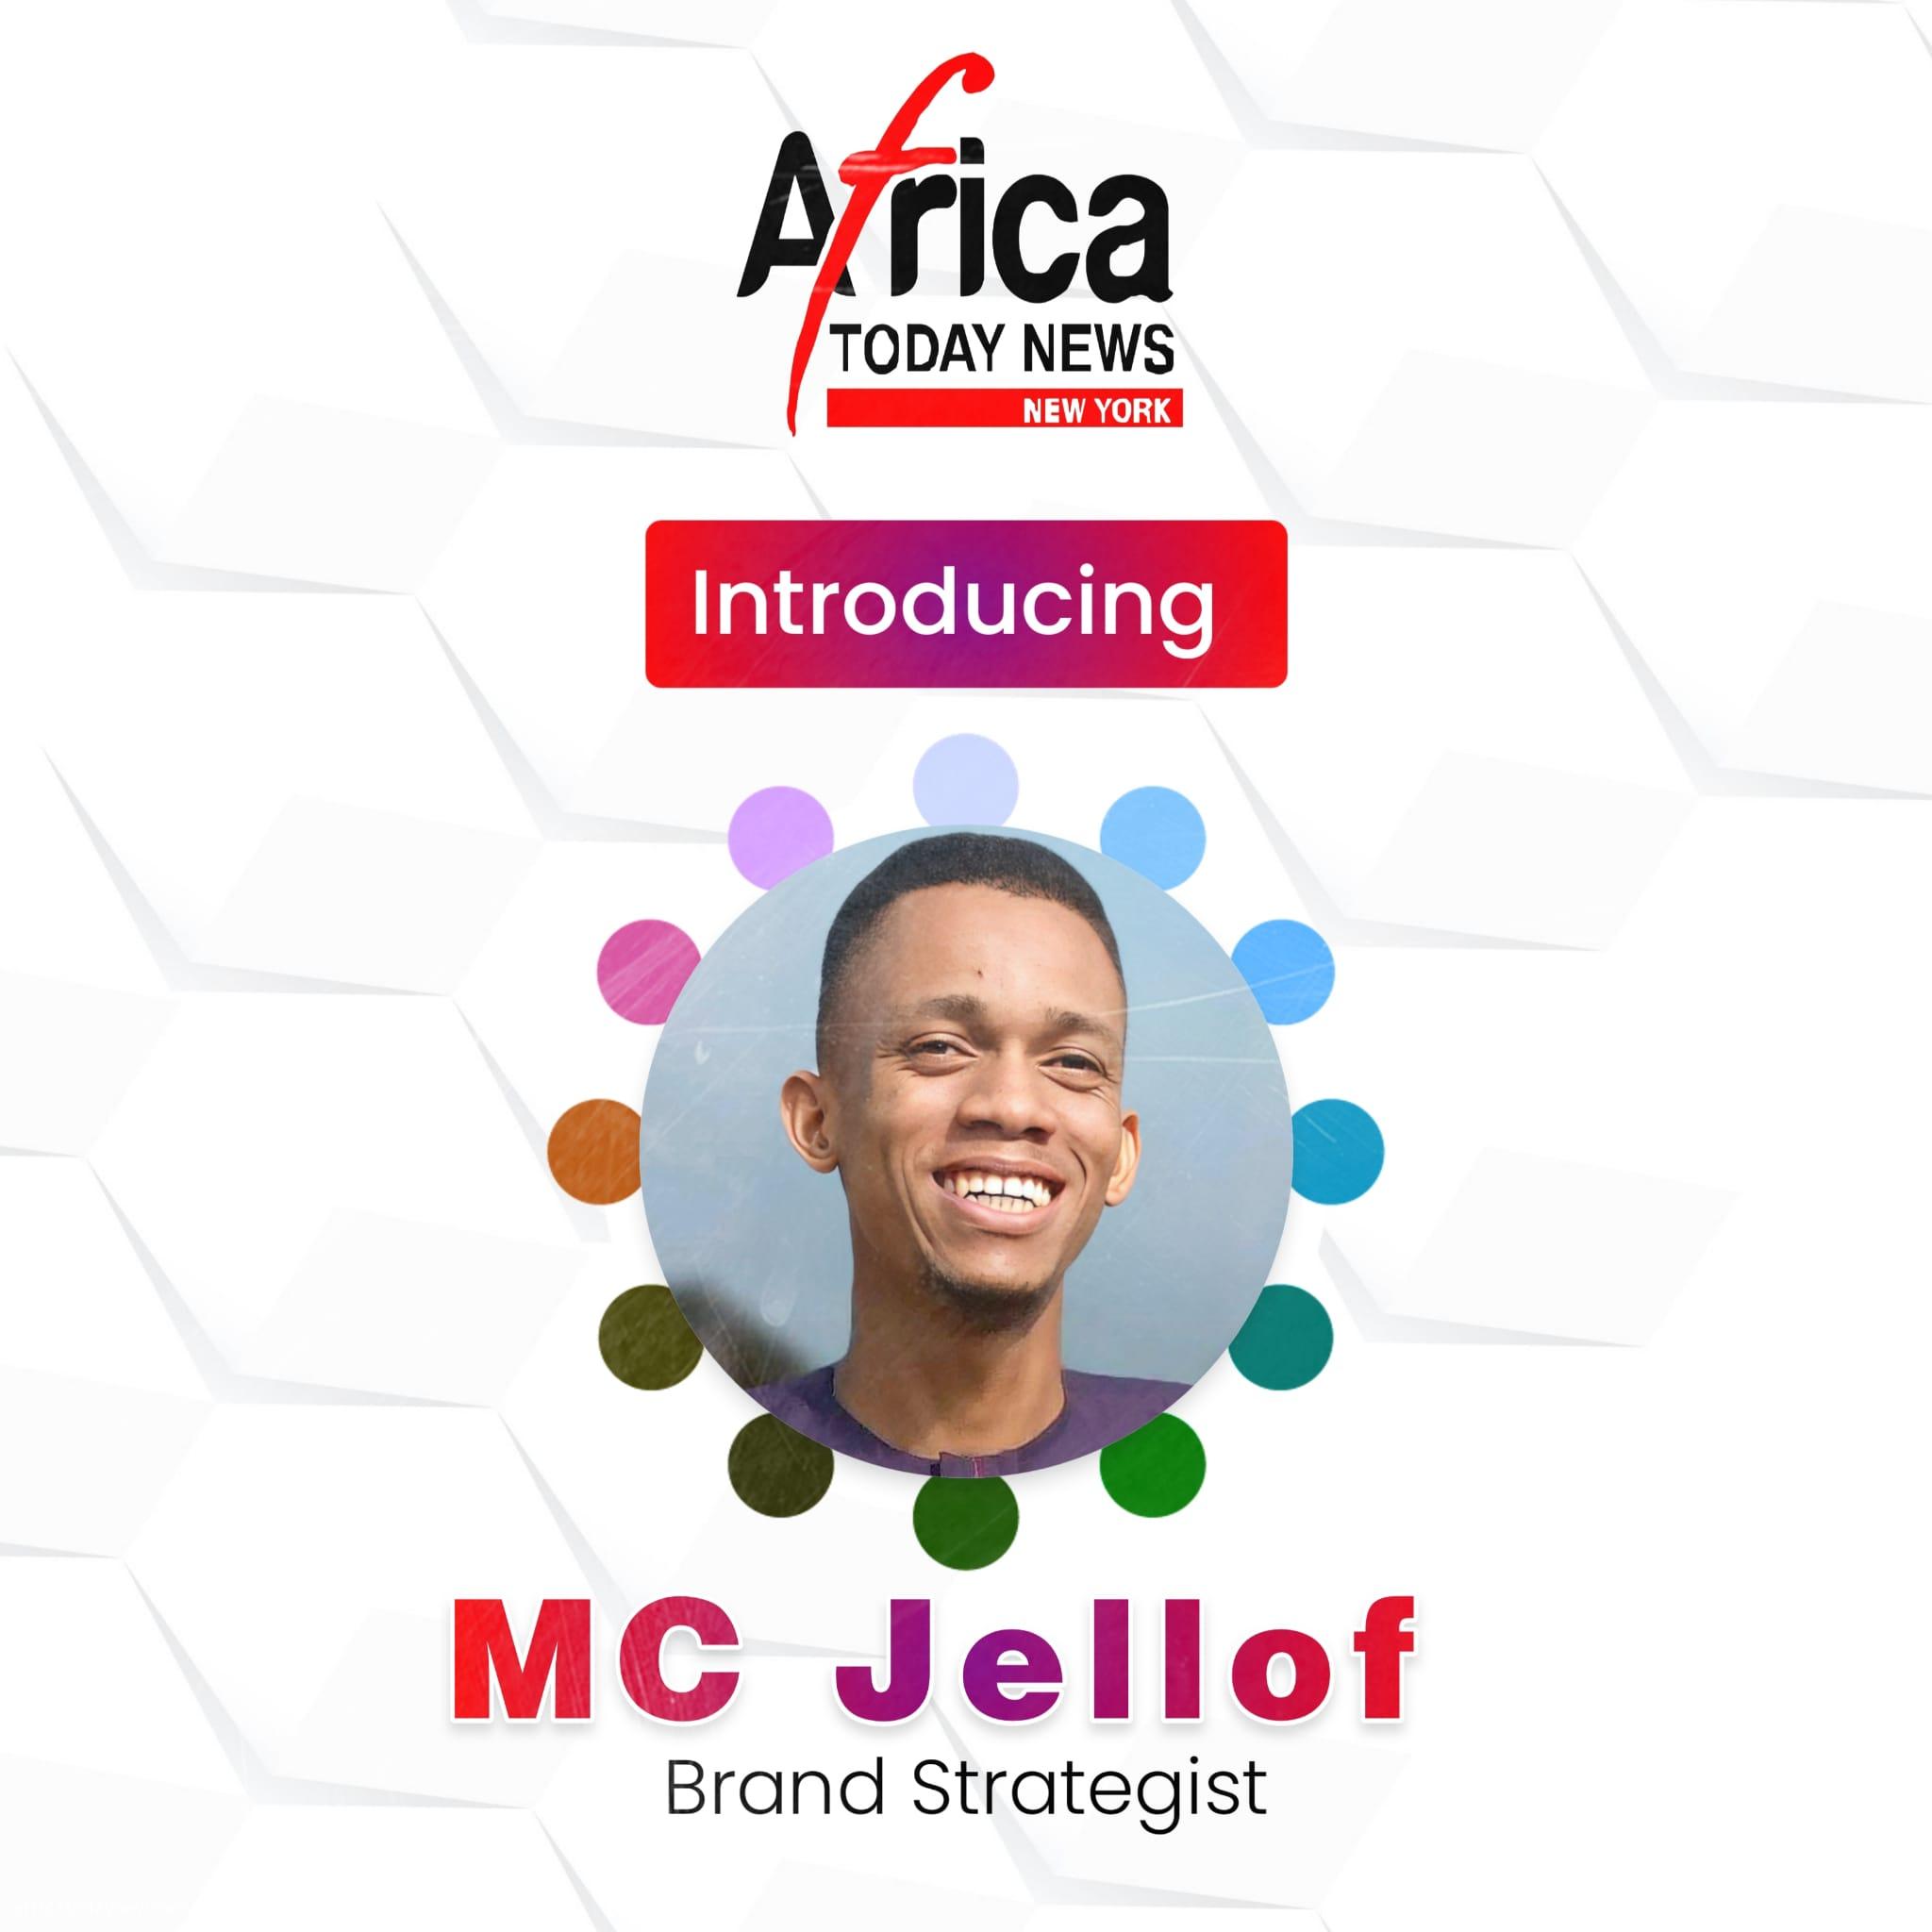 MC Jellof Now Africa Today News, New York Brand Strategist